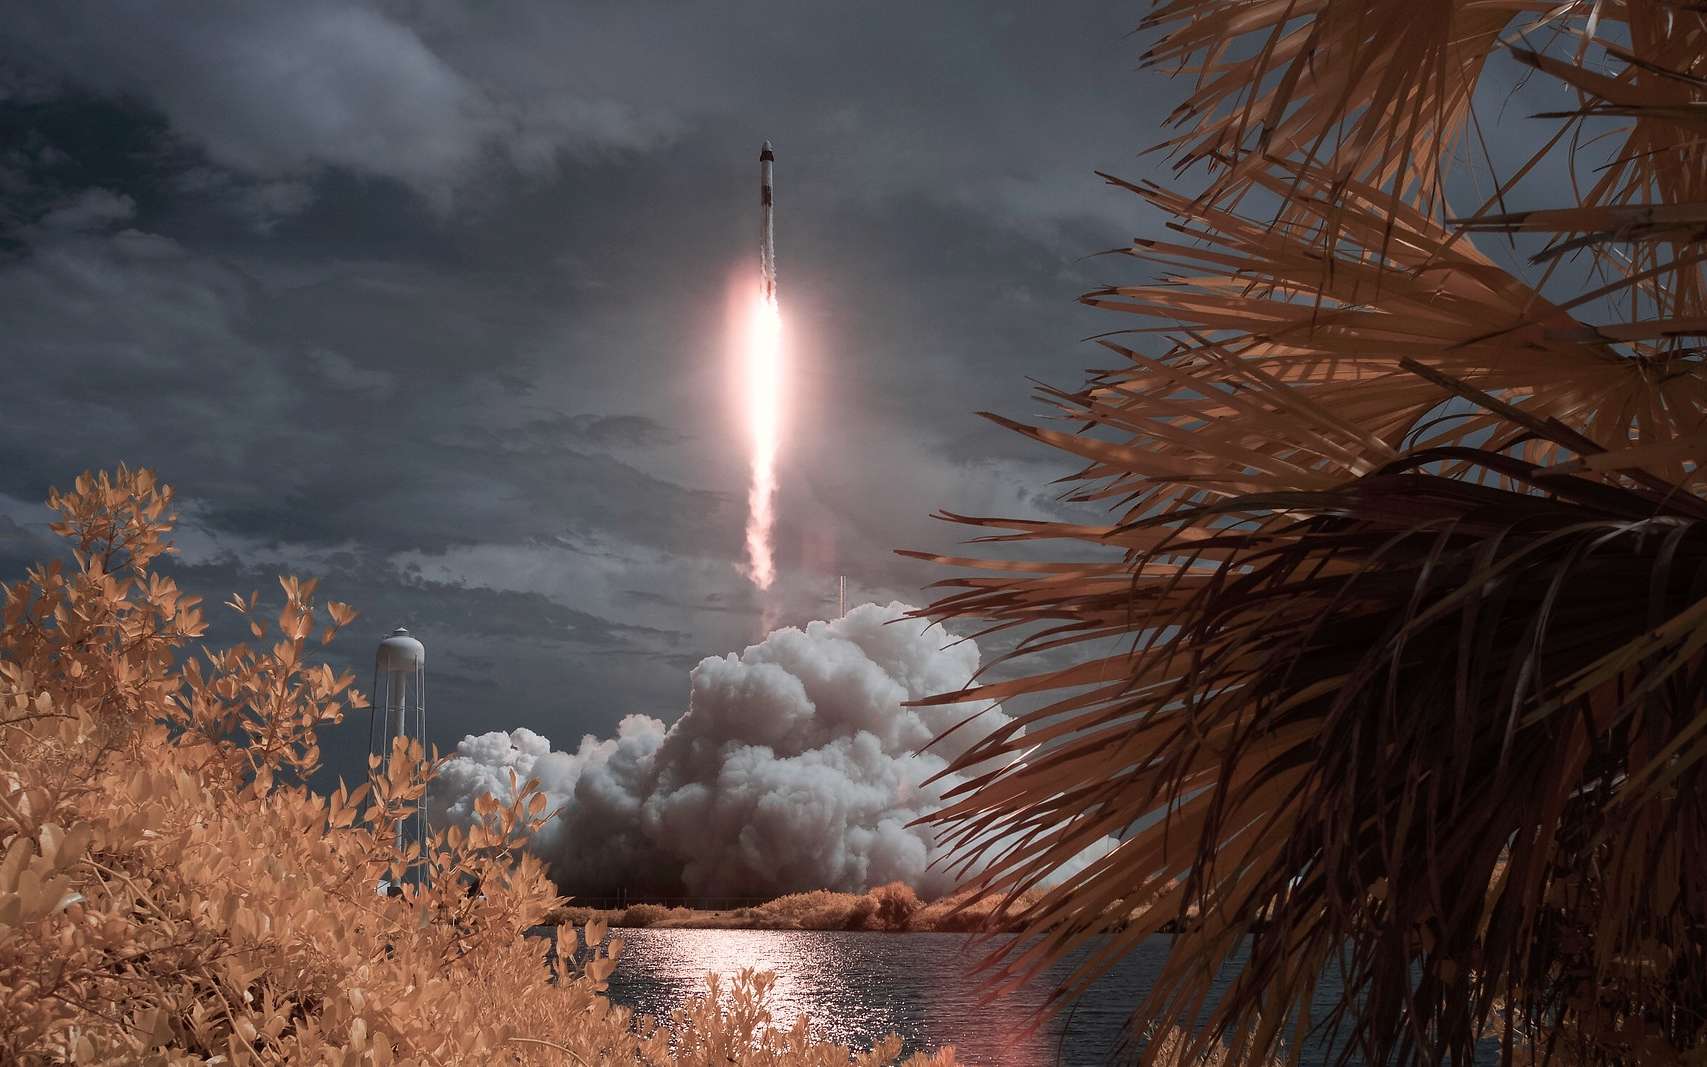 Spaceship, Starlink, Crew Dragon : une année intense et faste pour SpaceX